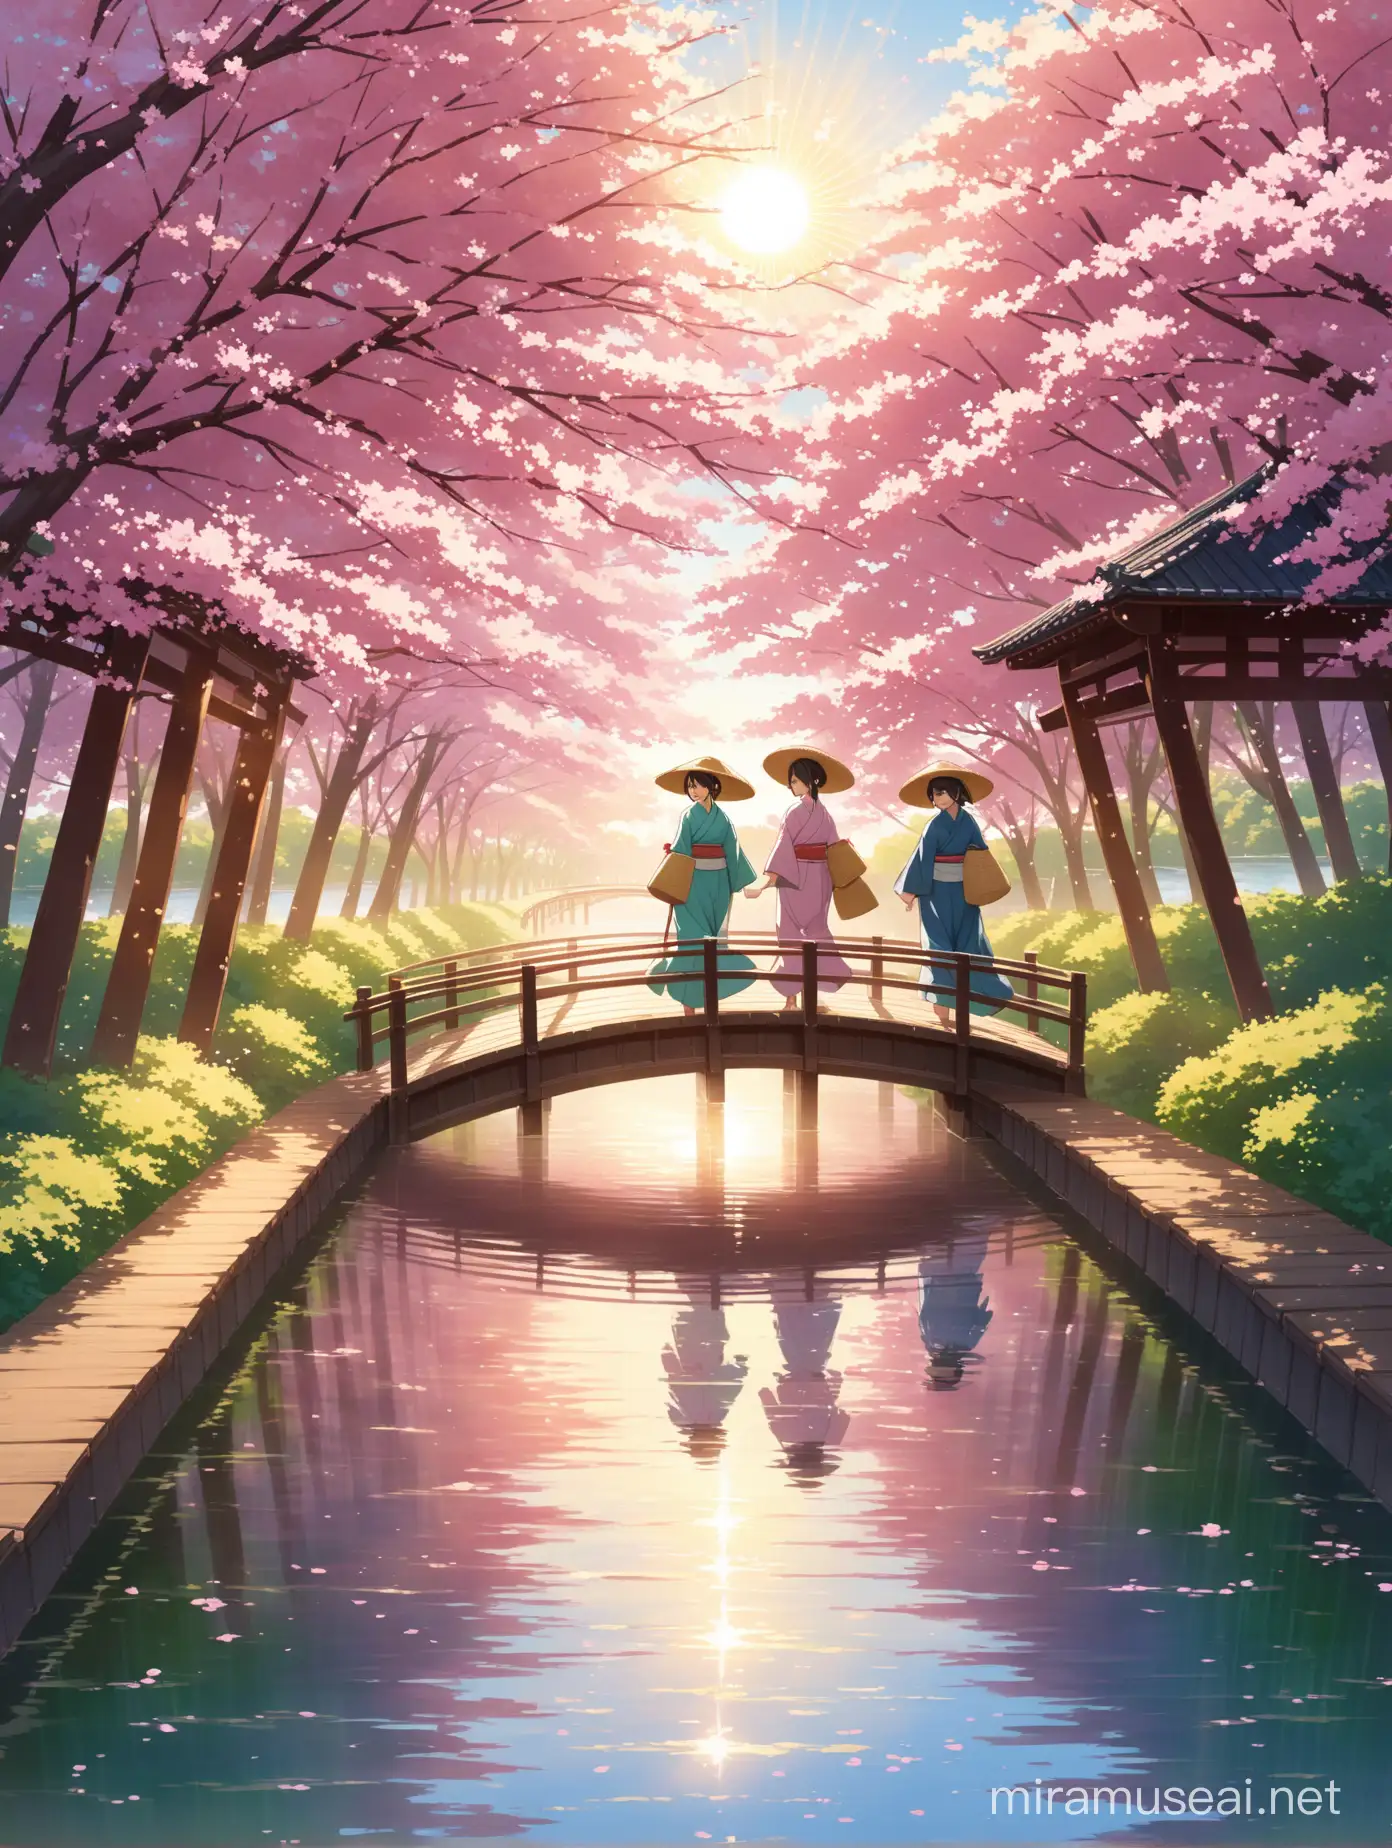 Muromachi Period Women Walking on Bridge with Sakura Trees